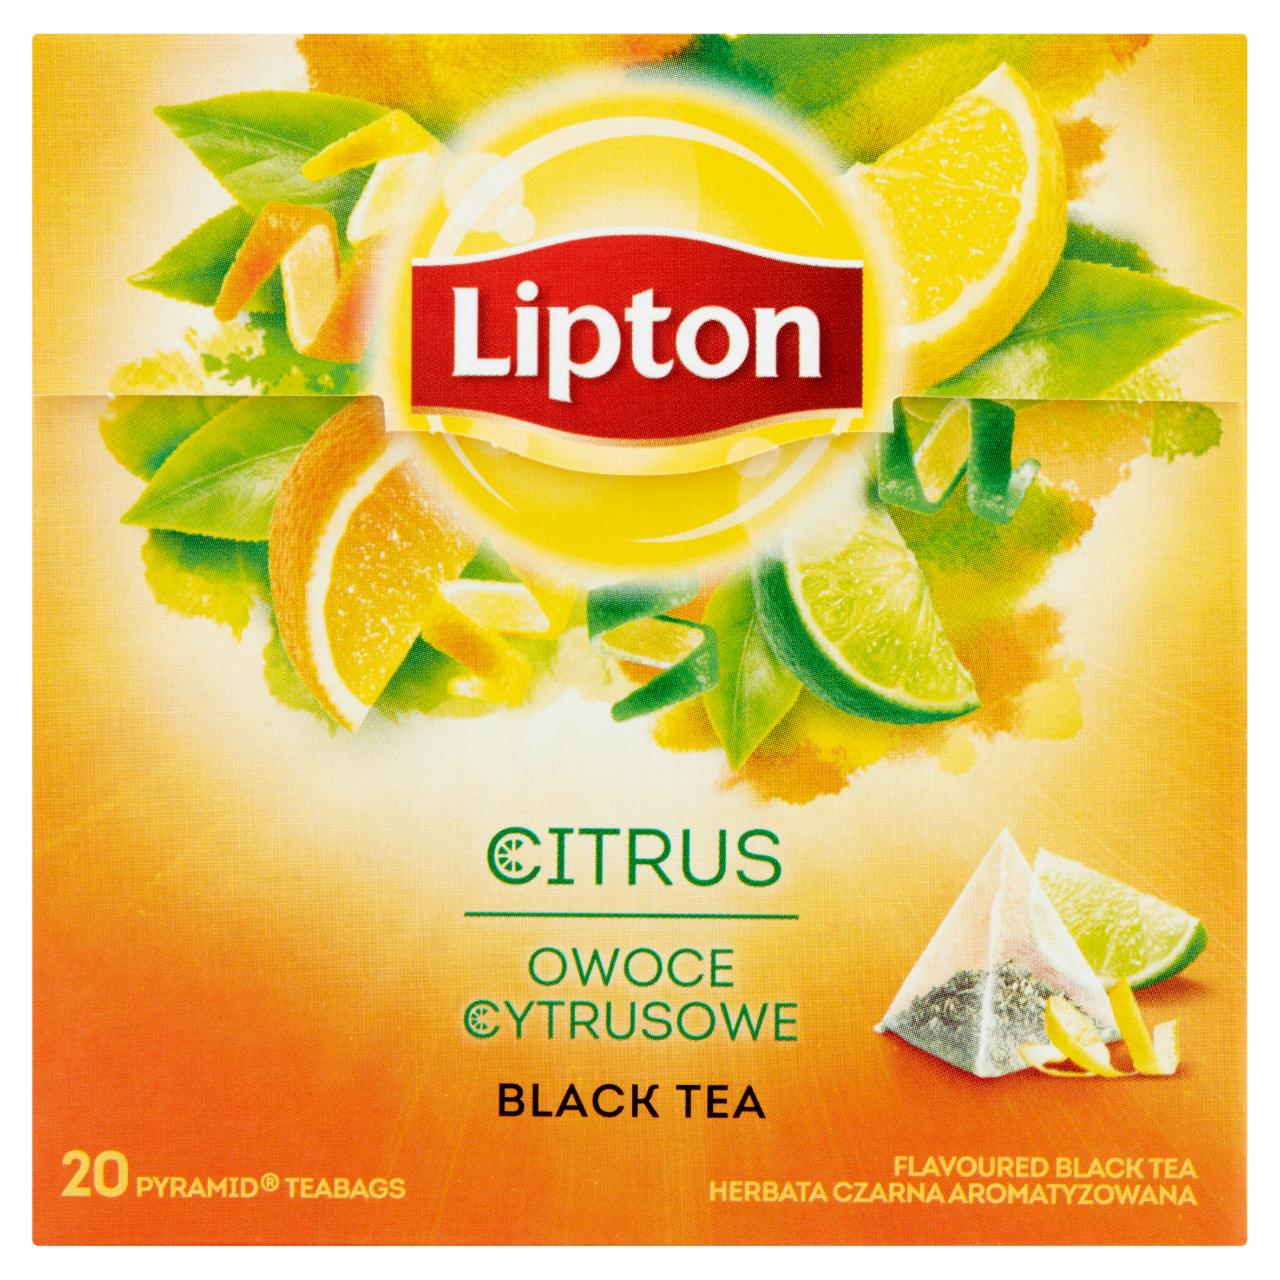 Zdjęcia - Lipton Herbata czarna aromatyzowana owoce cytrusowe 36 g (20 torebek)